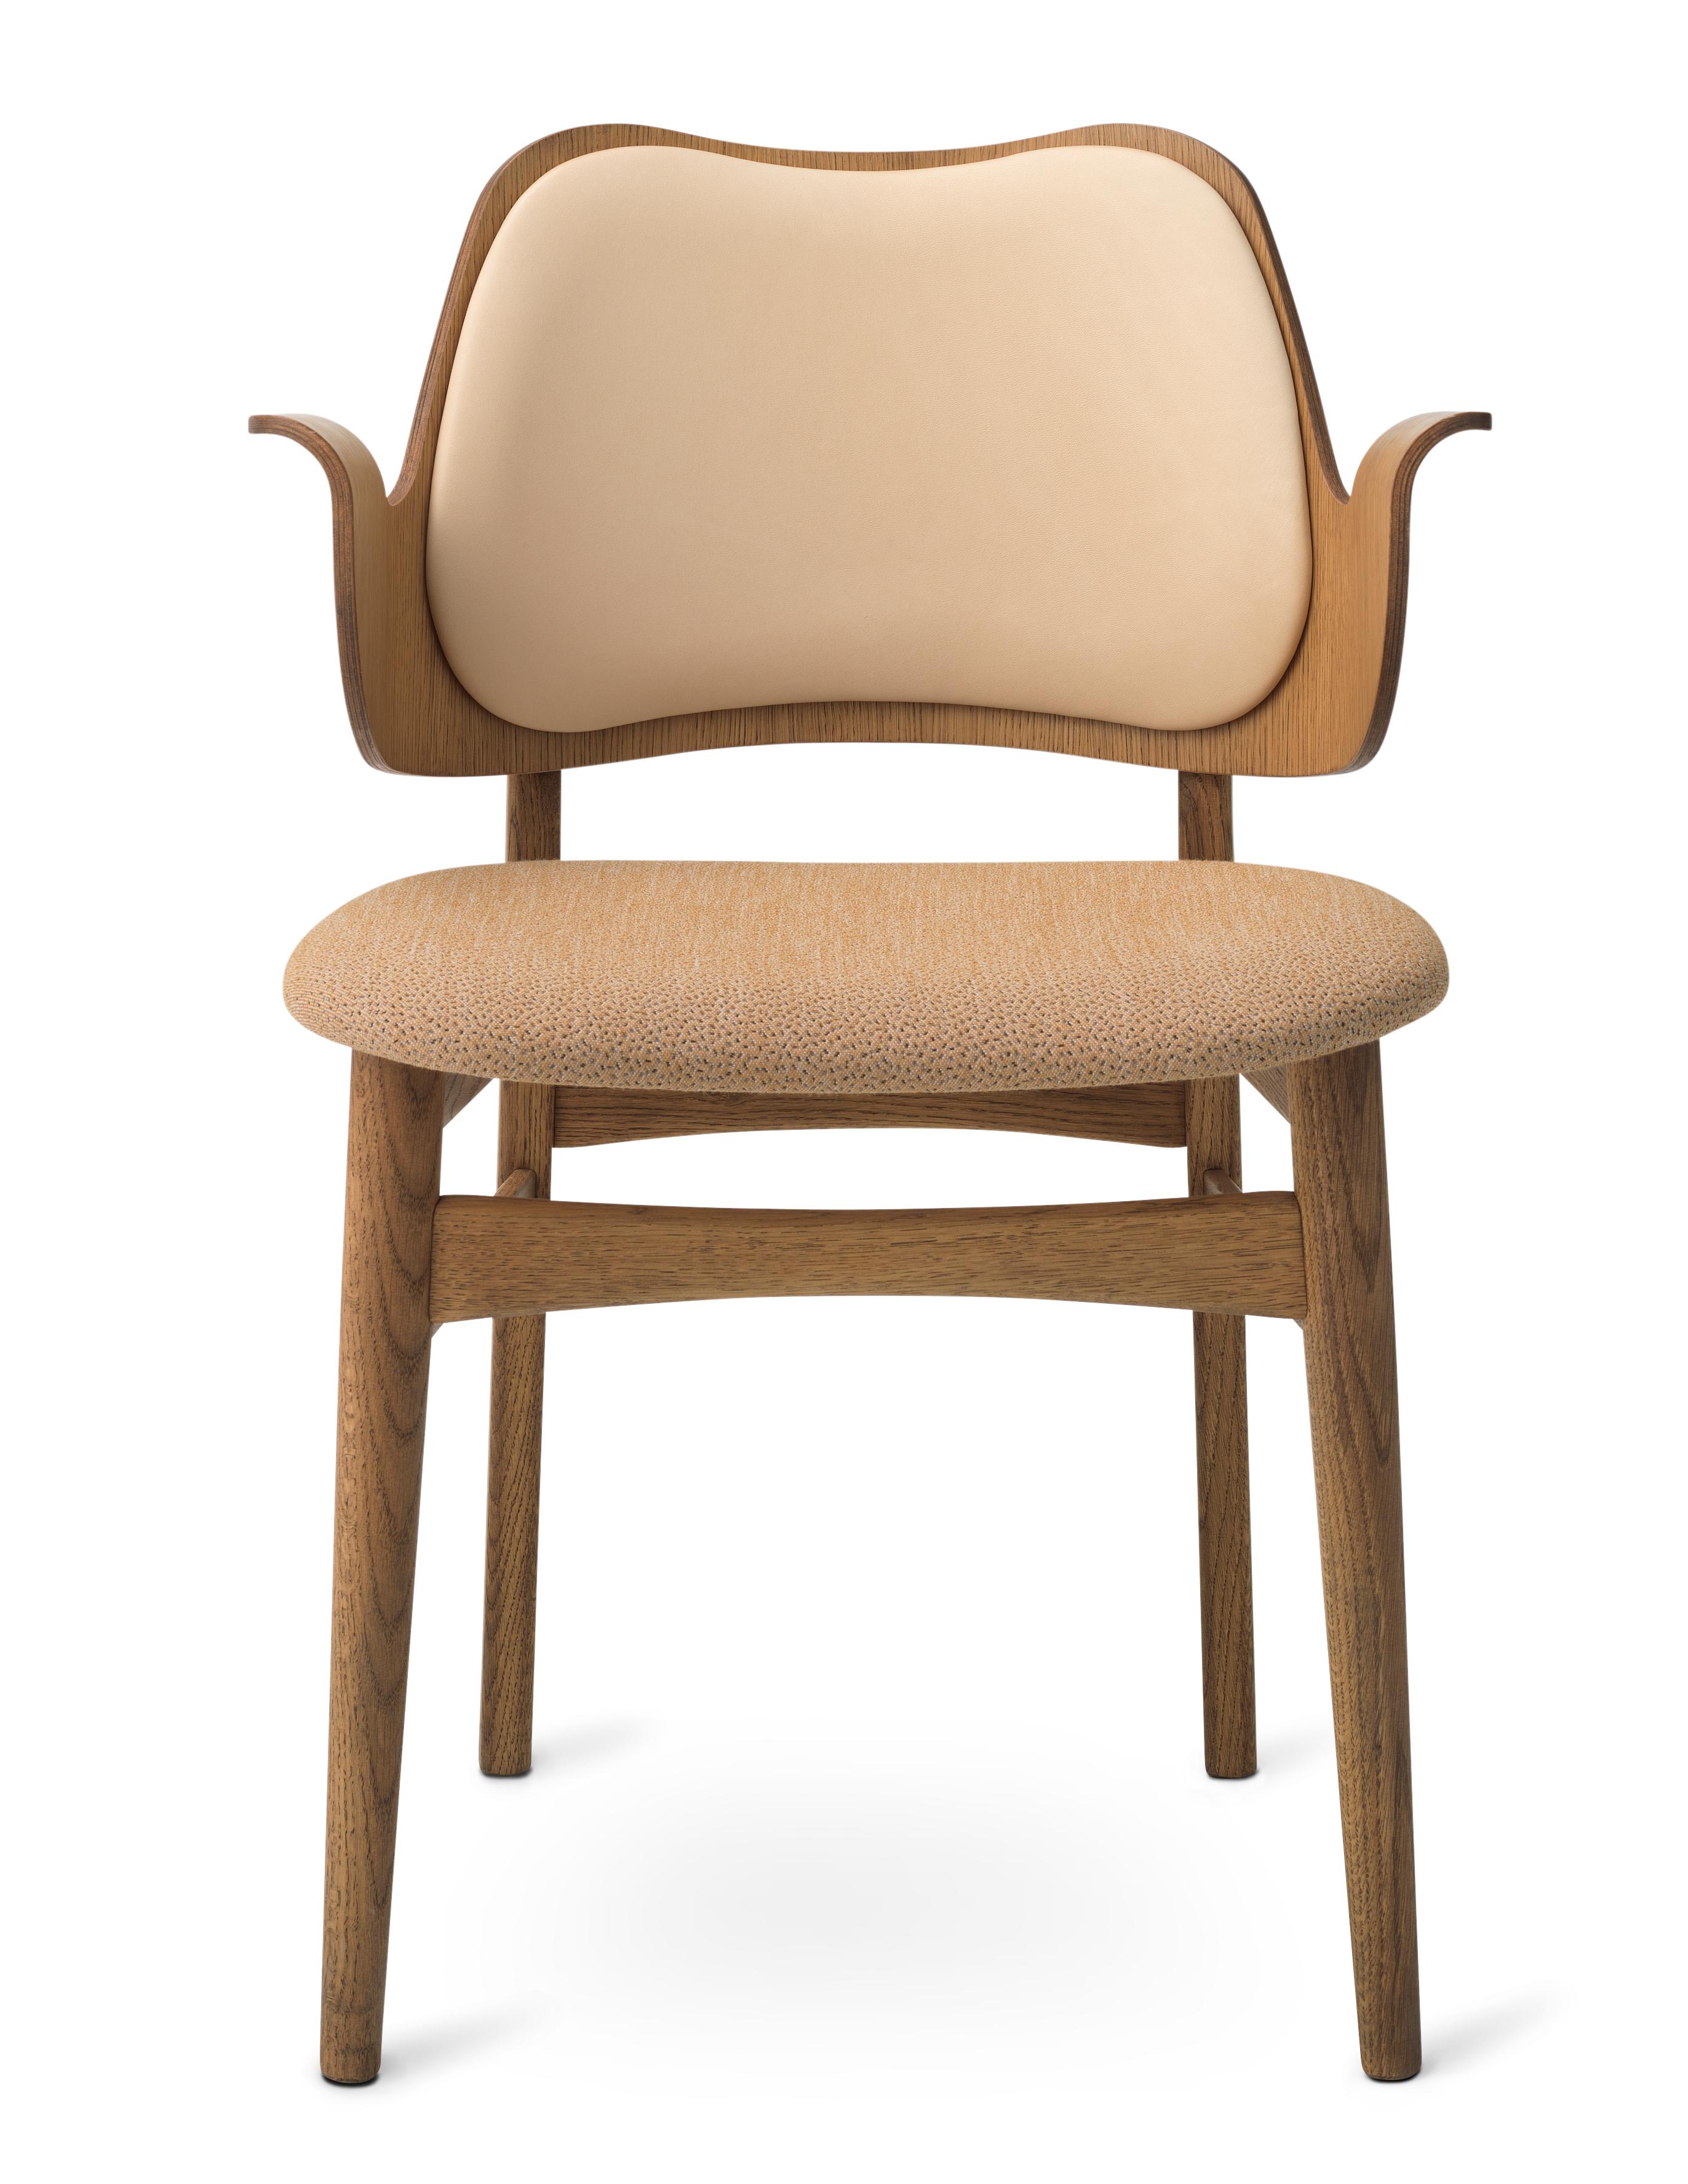 For Sale: Beige (Vegetal/Sprinkles 254) Gesture Two-Tone Fully Upholstered Chair in Teak, by Hans Olsen from Warm Nordic